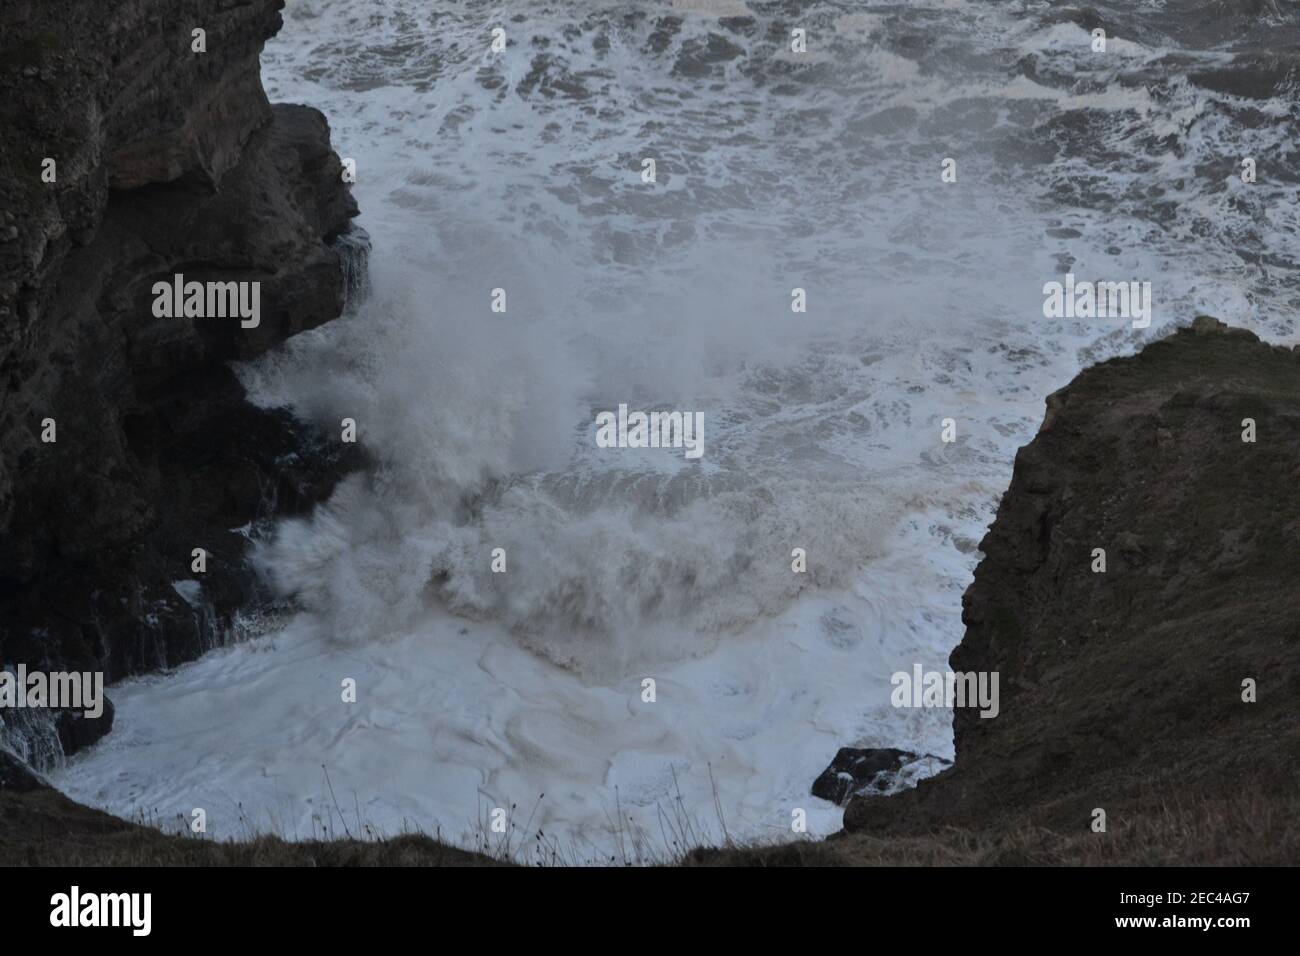 Wild And Windy North Sea - Filey Brigg - Rough North Sea - White Water - Crashing Waves - Winter - Yorkshire - UK Stock Photo